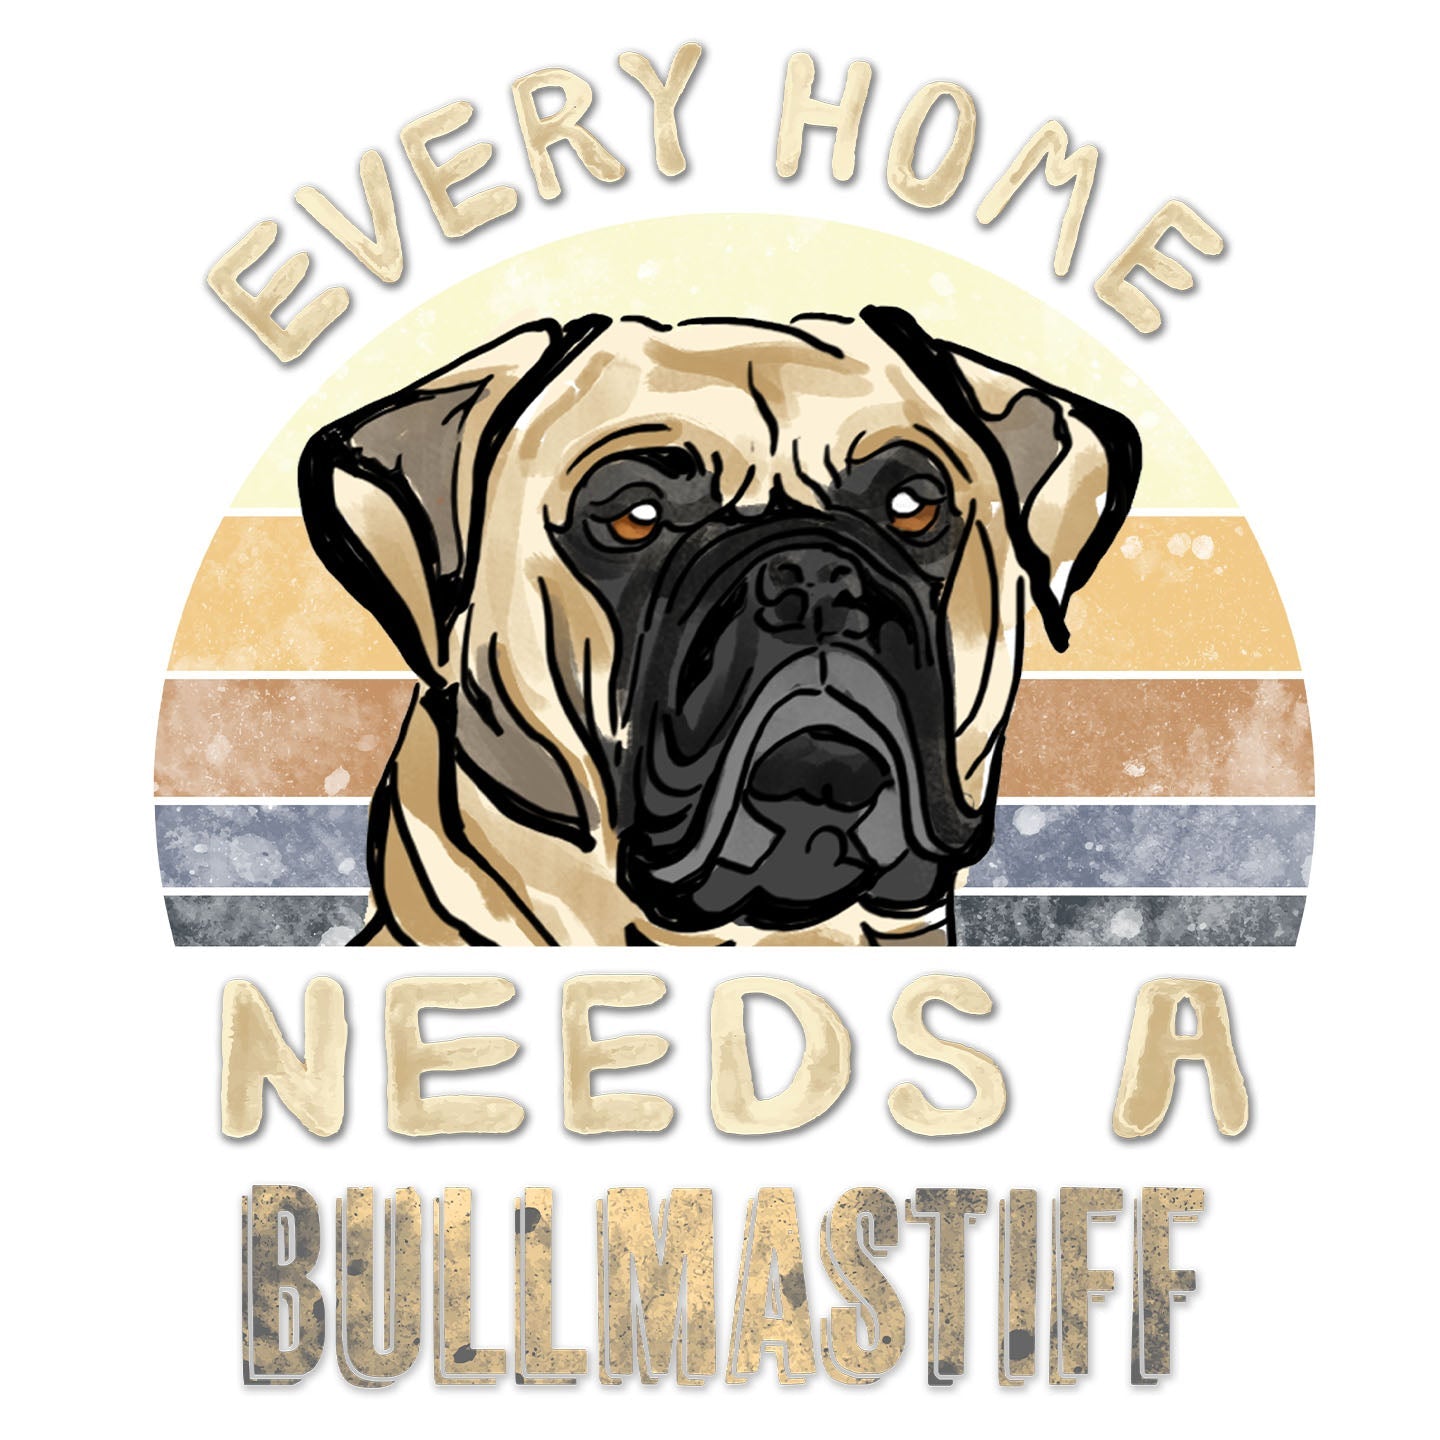 Every Home Needs a Bullmastiff - Women's V-Neck T-Shirt